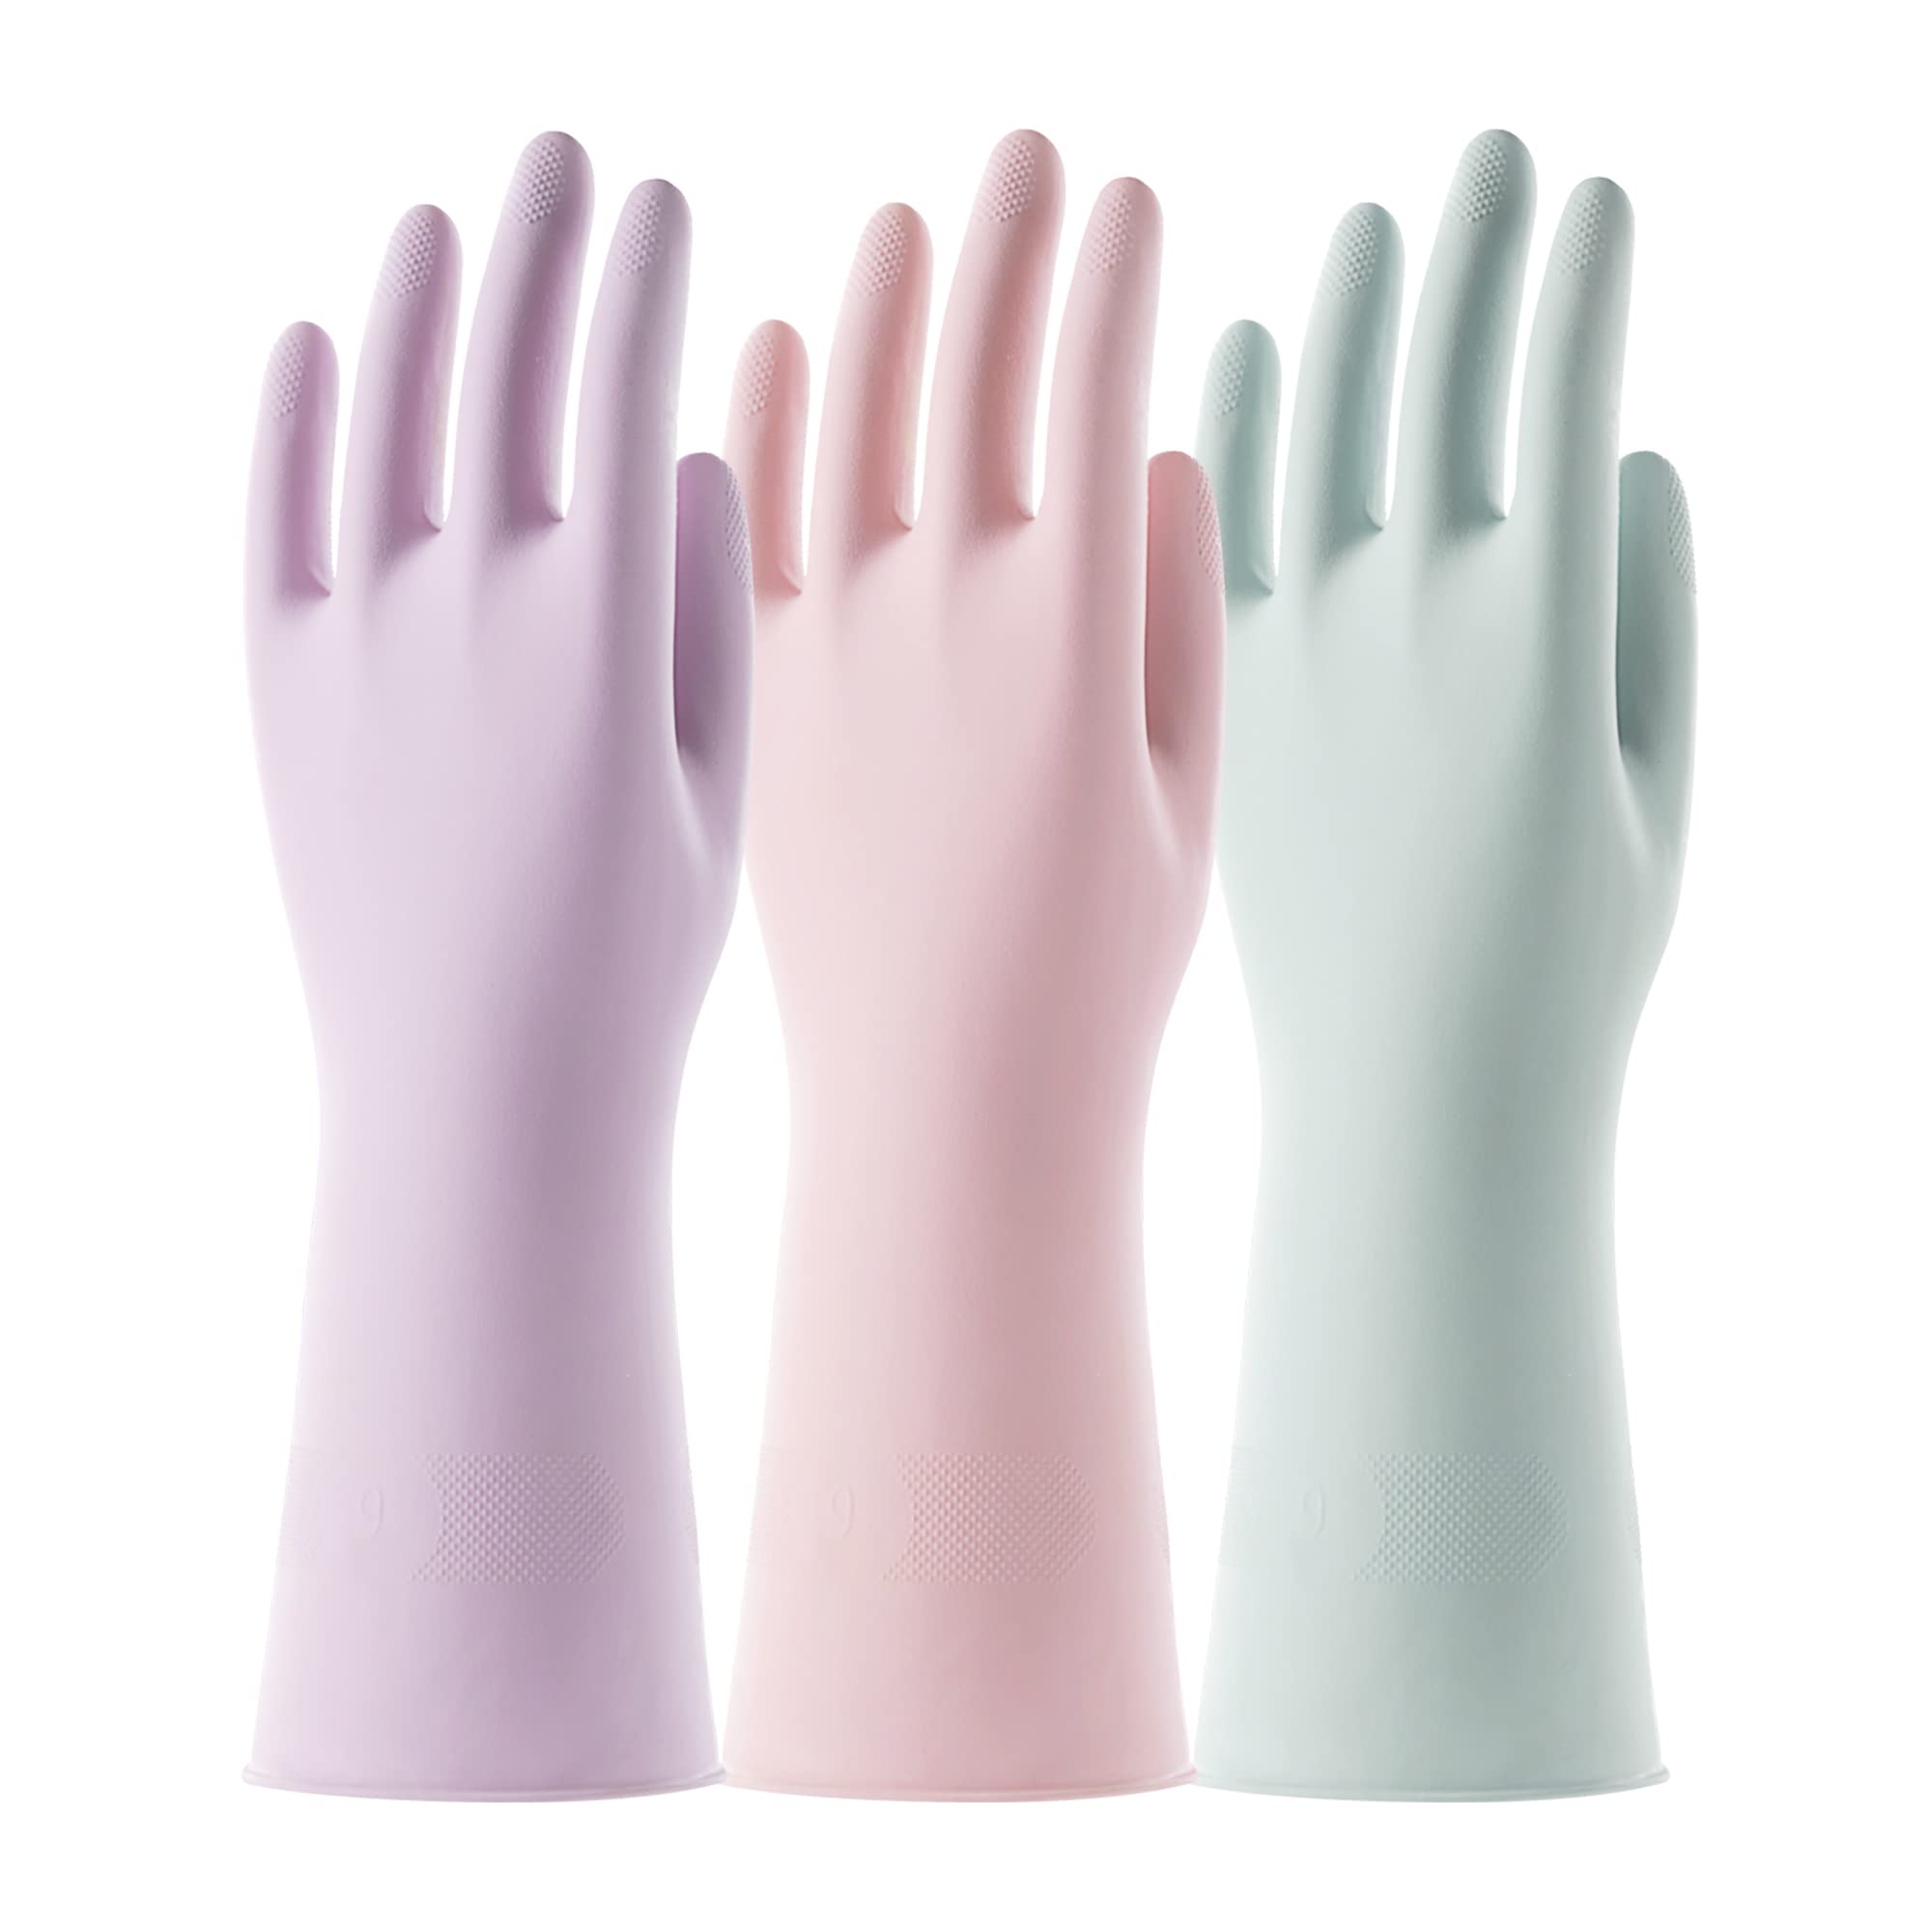 COOLJOB  A3 Level 5 Cut Resistant Safety Work Gloves for Men Women